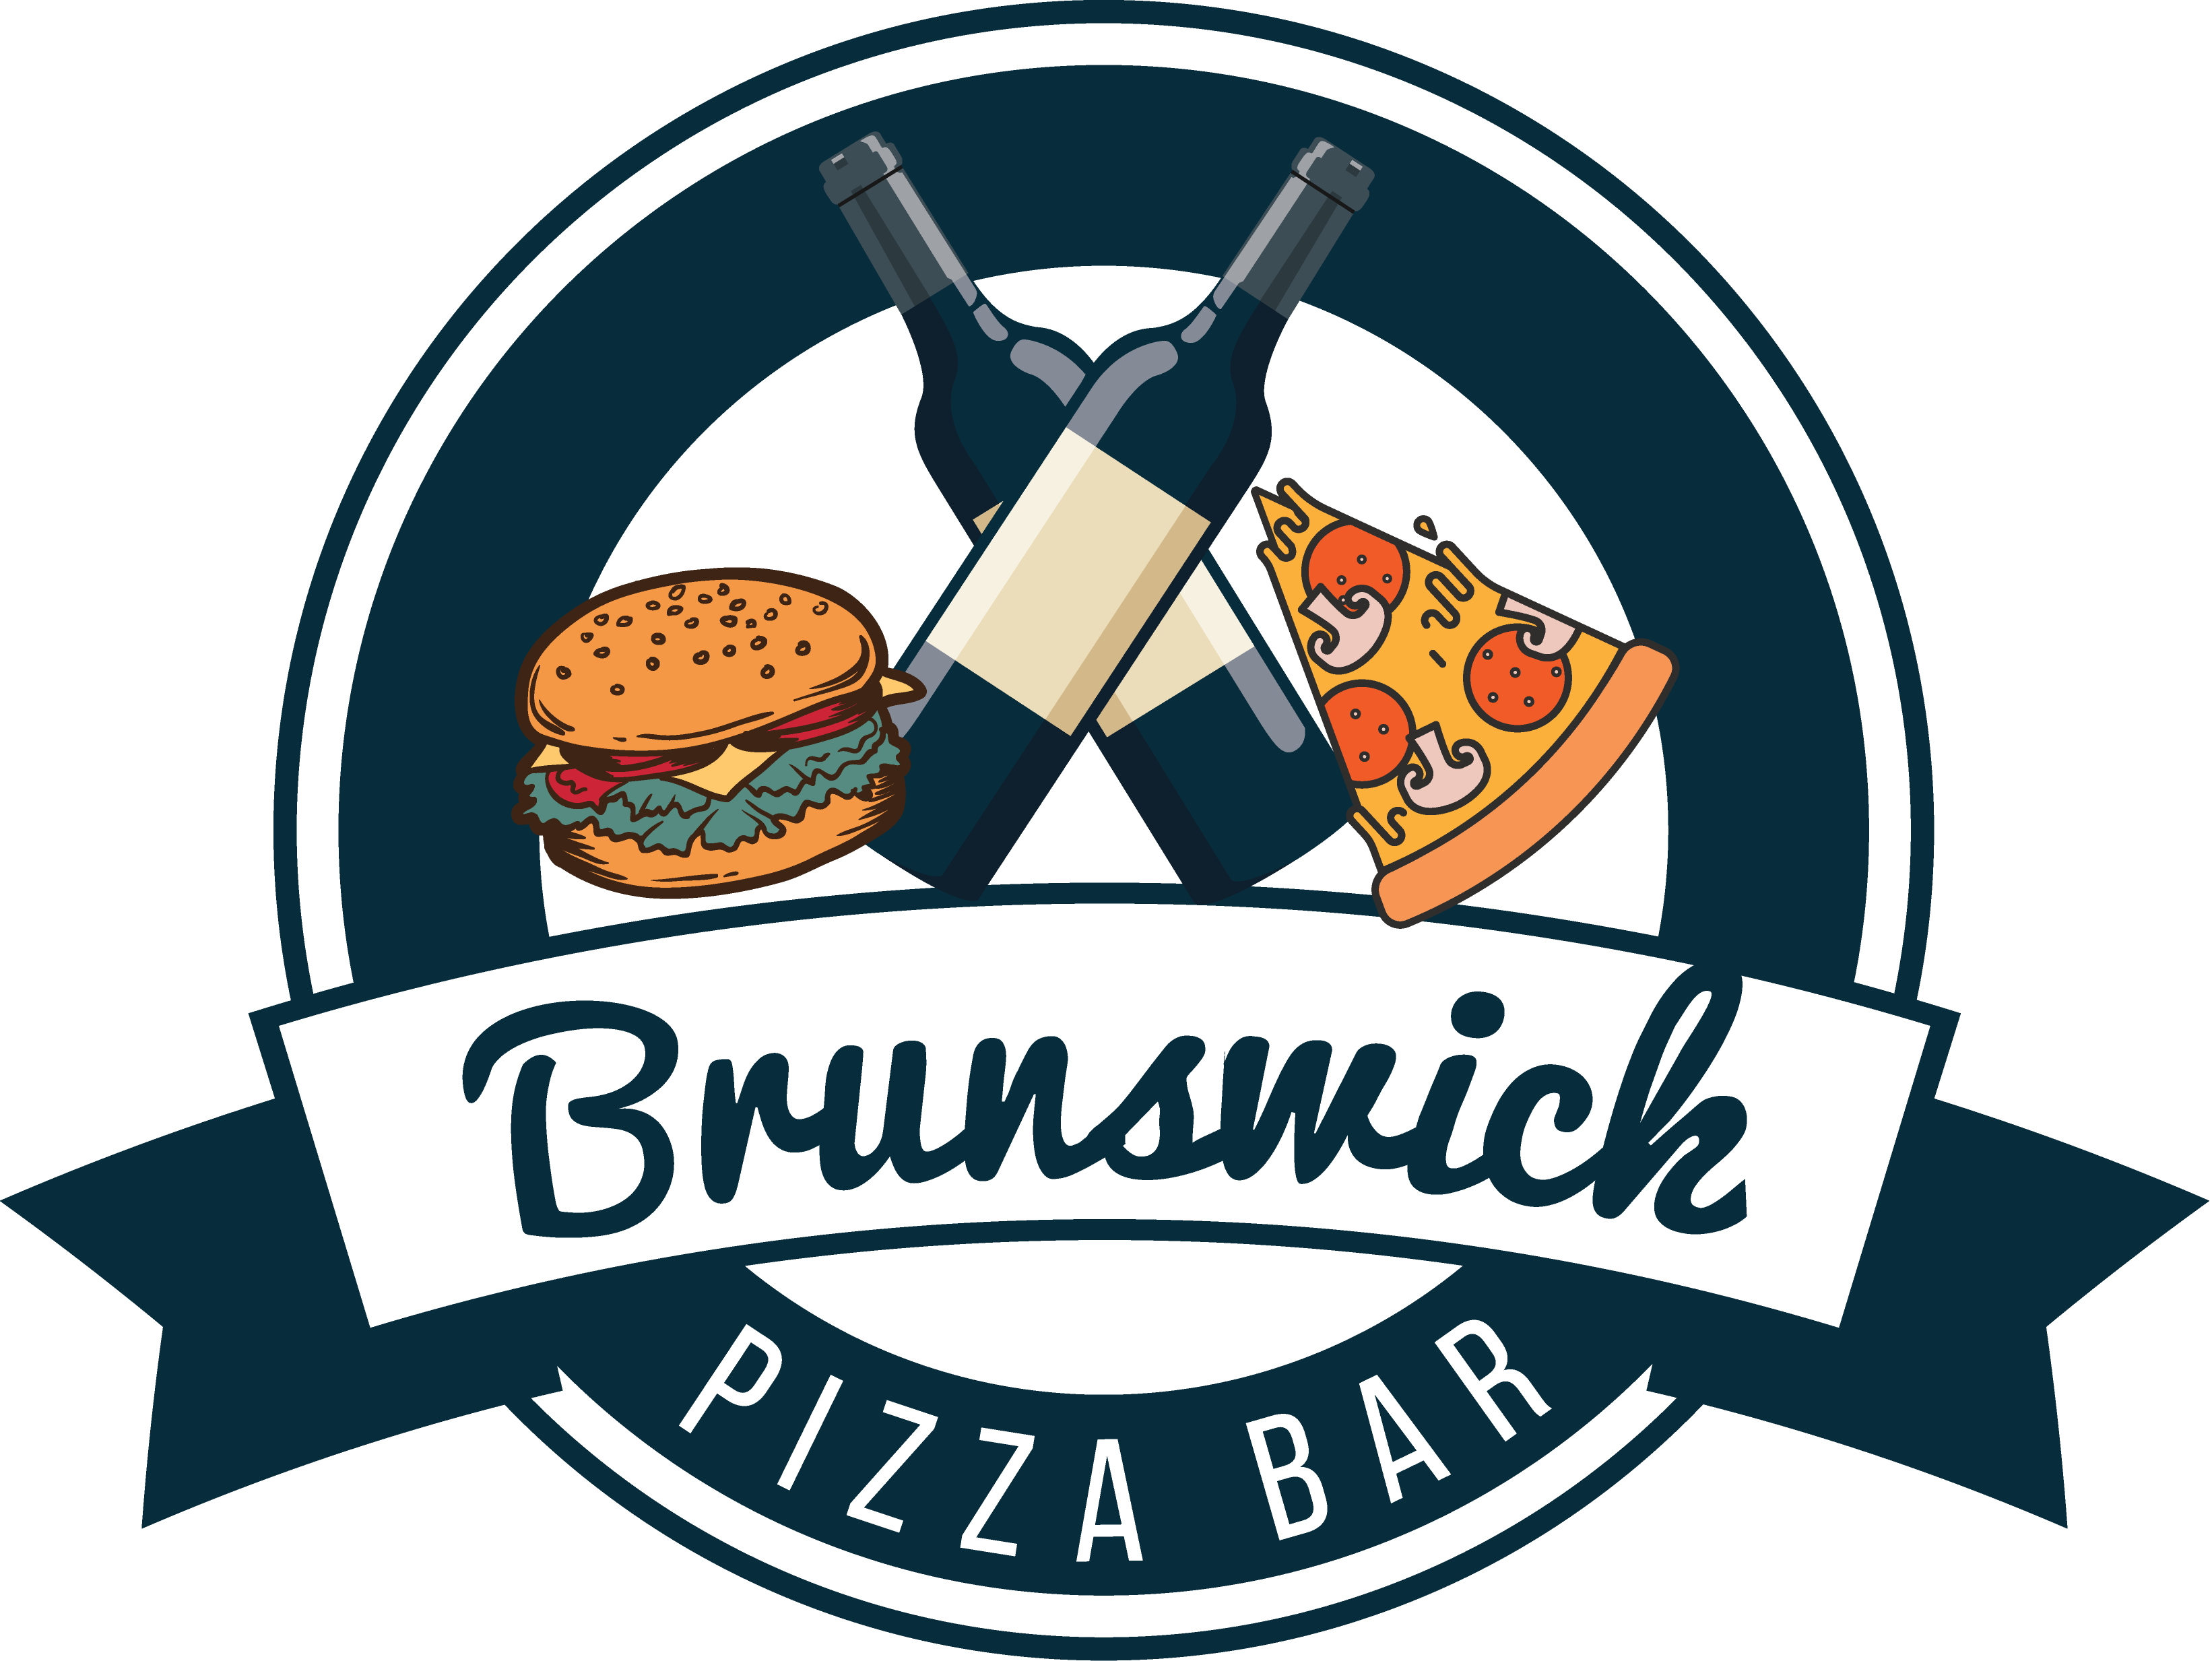 Brunswick Pizza Bar - Brunswick Pizza Bar (3284x2466)